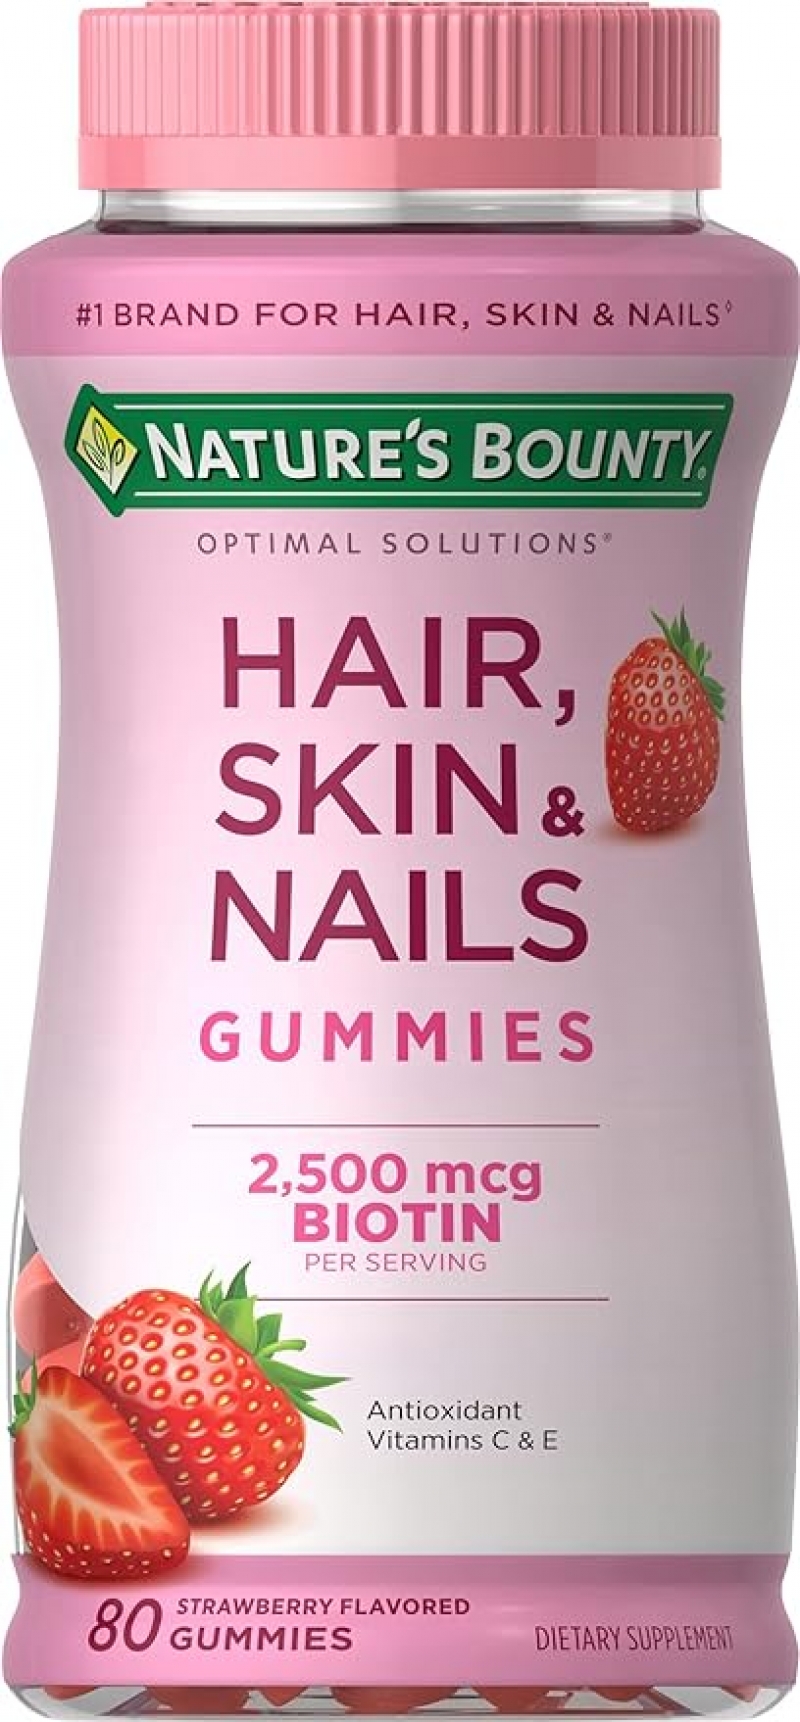 ihocon: [買一送一] Nature's Bounty Optimal Solutions Hair, Skin & Nails Vitamin Gummies with Biotin, 2500 mcg, Strawberry, 3-Pack of 80 Count Bottles 頭髮/皮膚/指甲維他命軟糖 80粒 2瓶